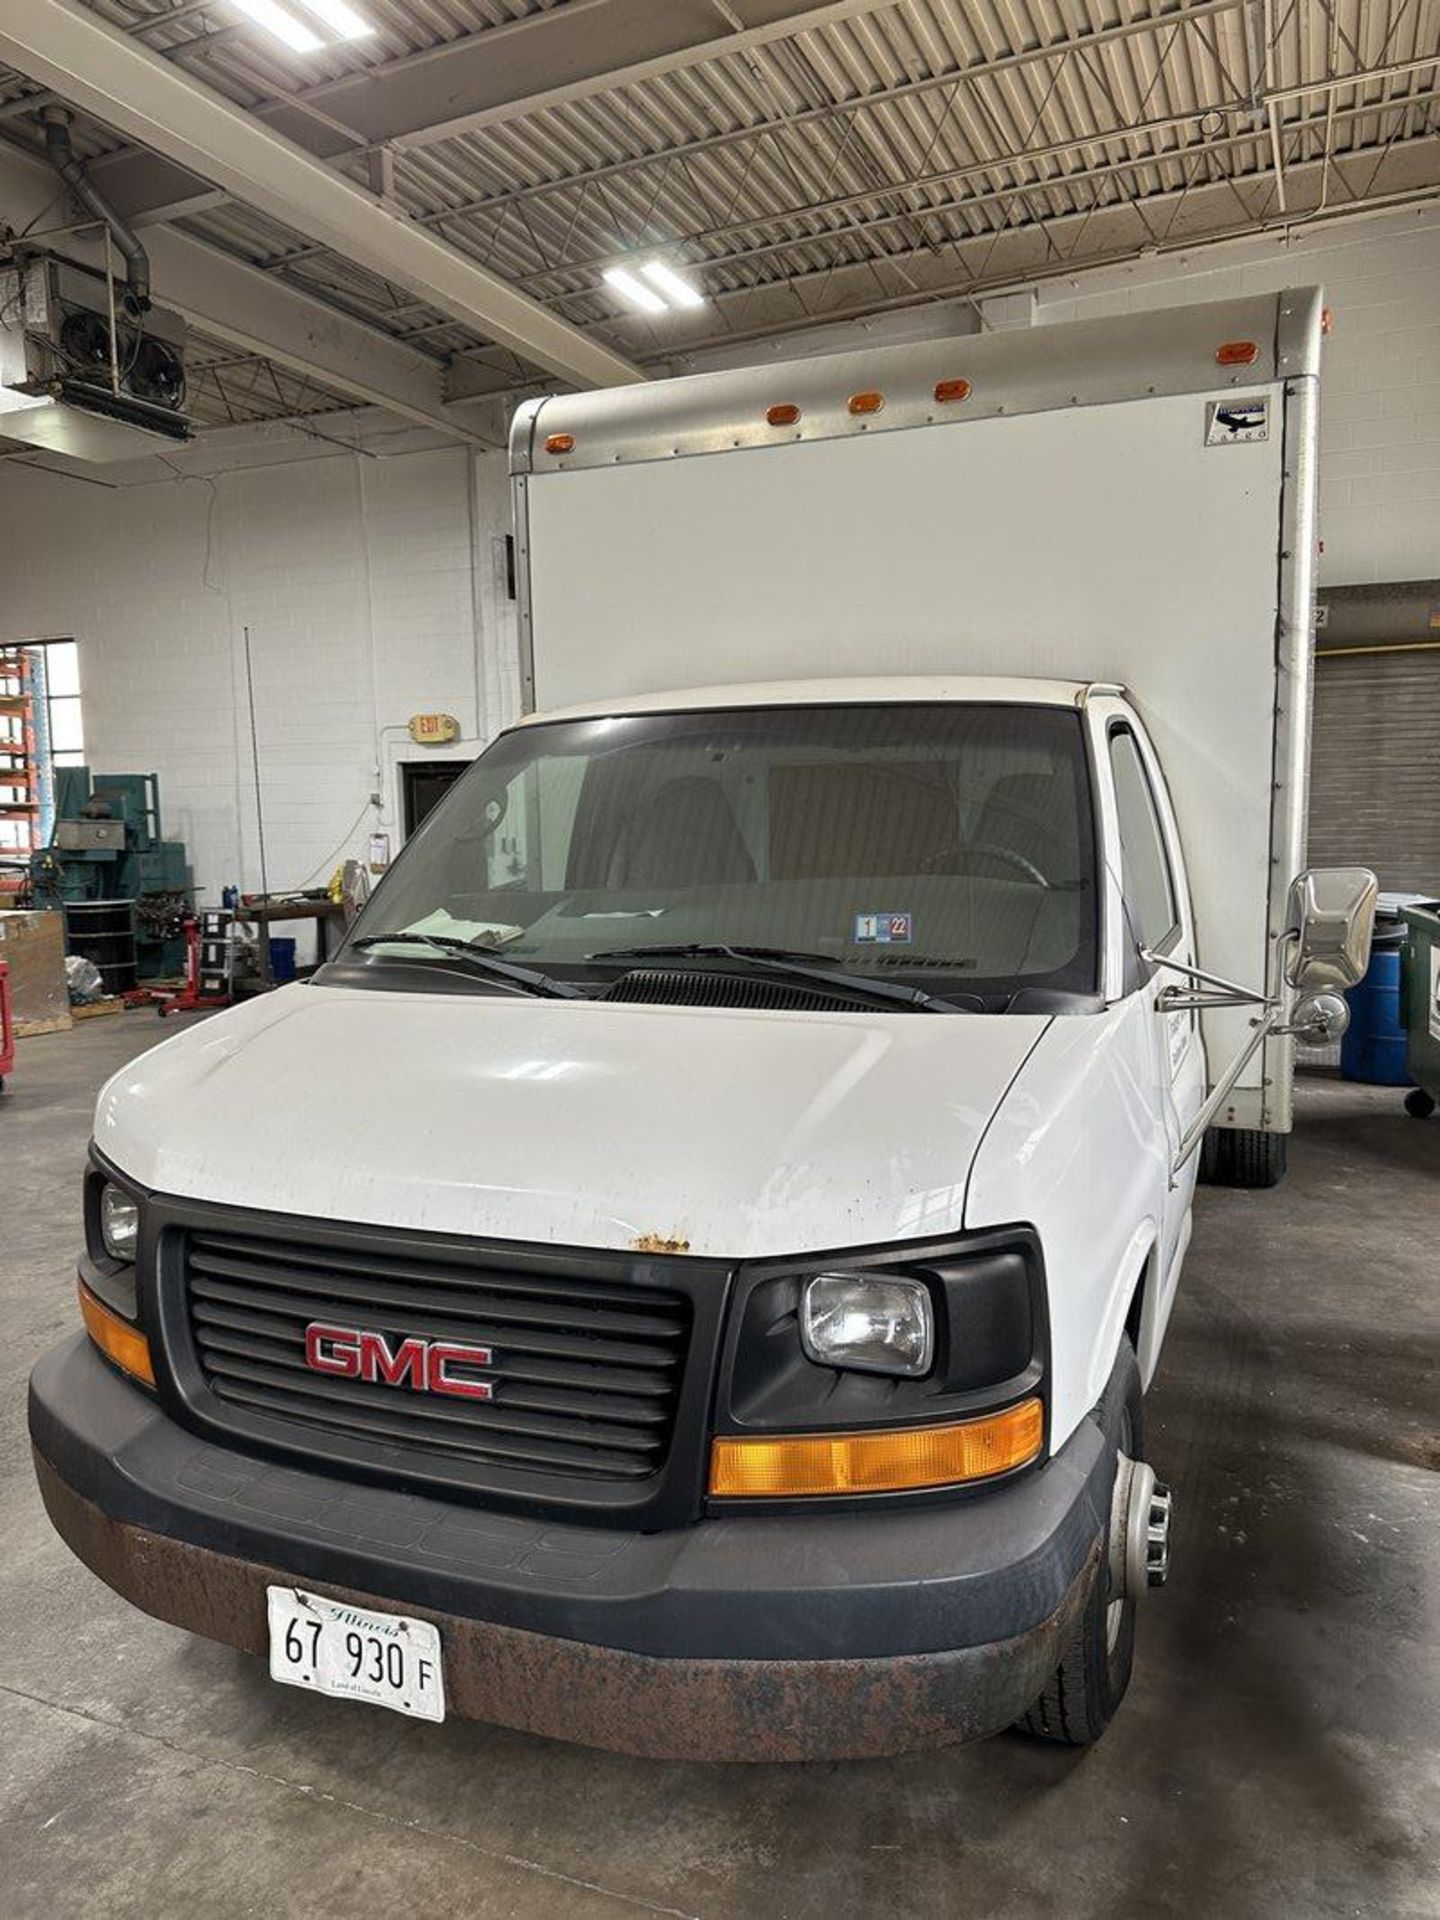 GMC 14' Box Van, VIN 1GDJG31U141224912, 2004 - Image 6 of 10